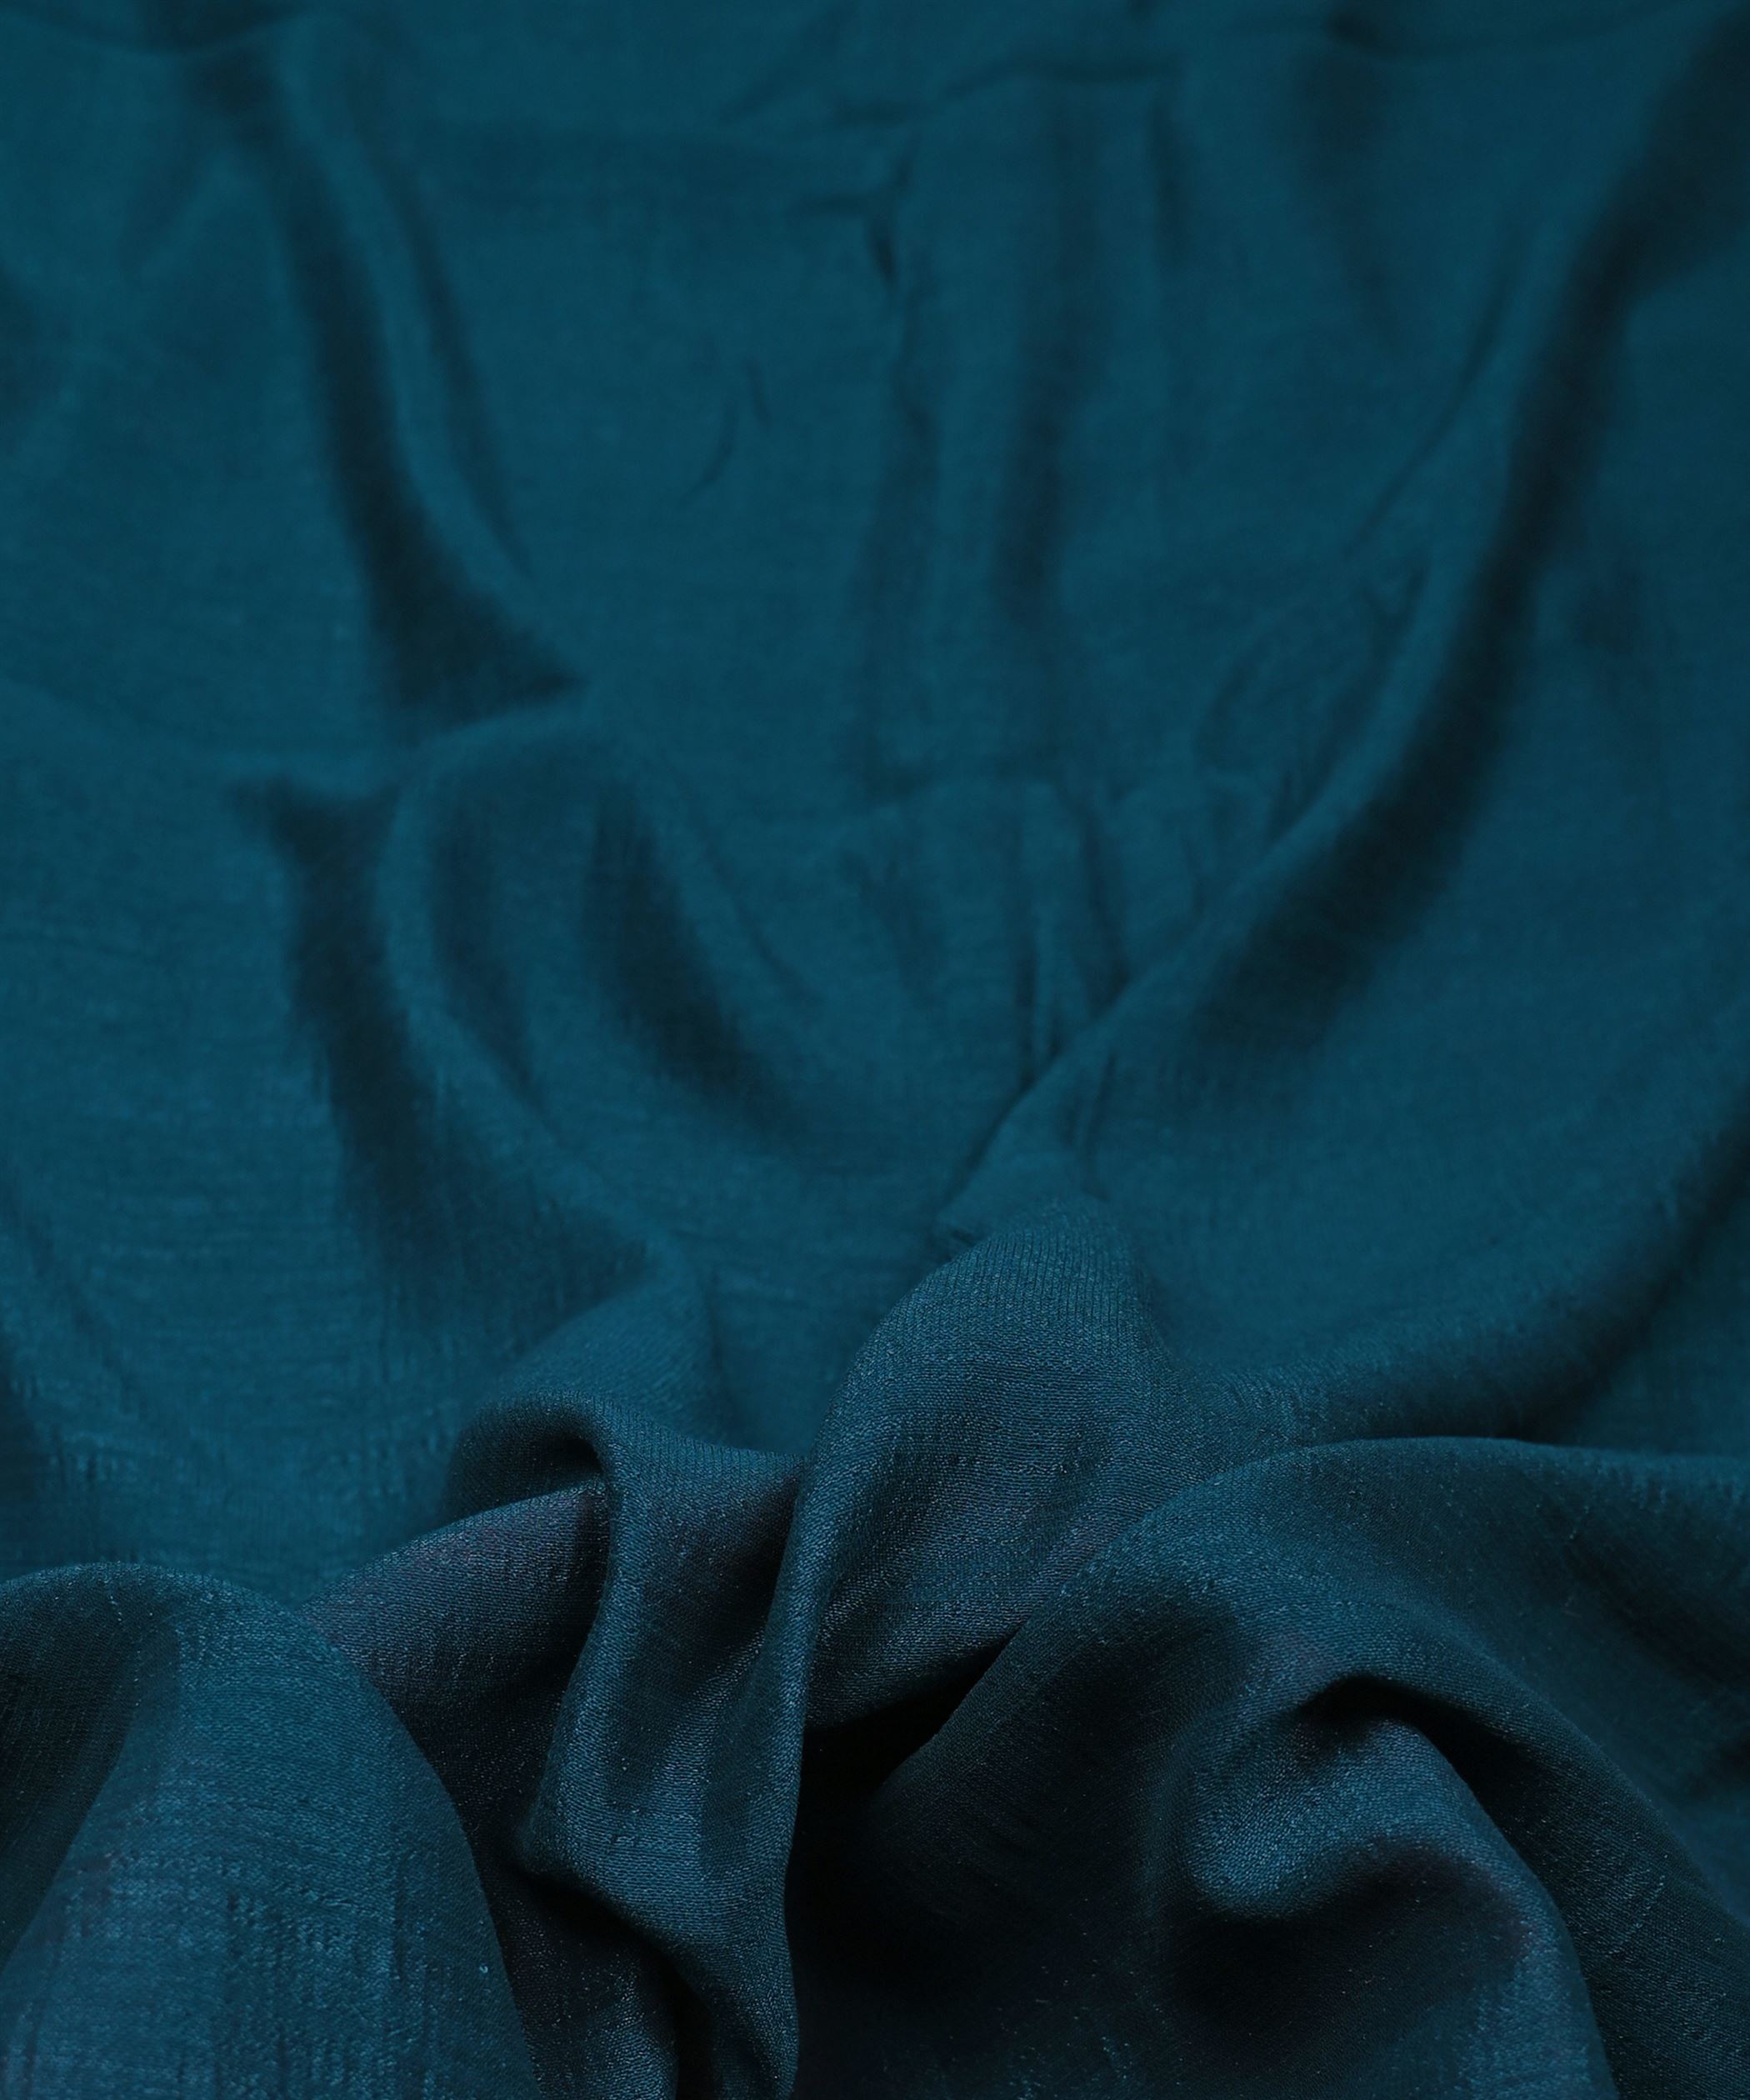 Teal Plain Dyed Semi Silk Fabric